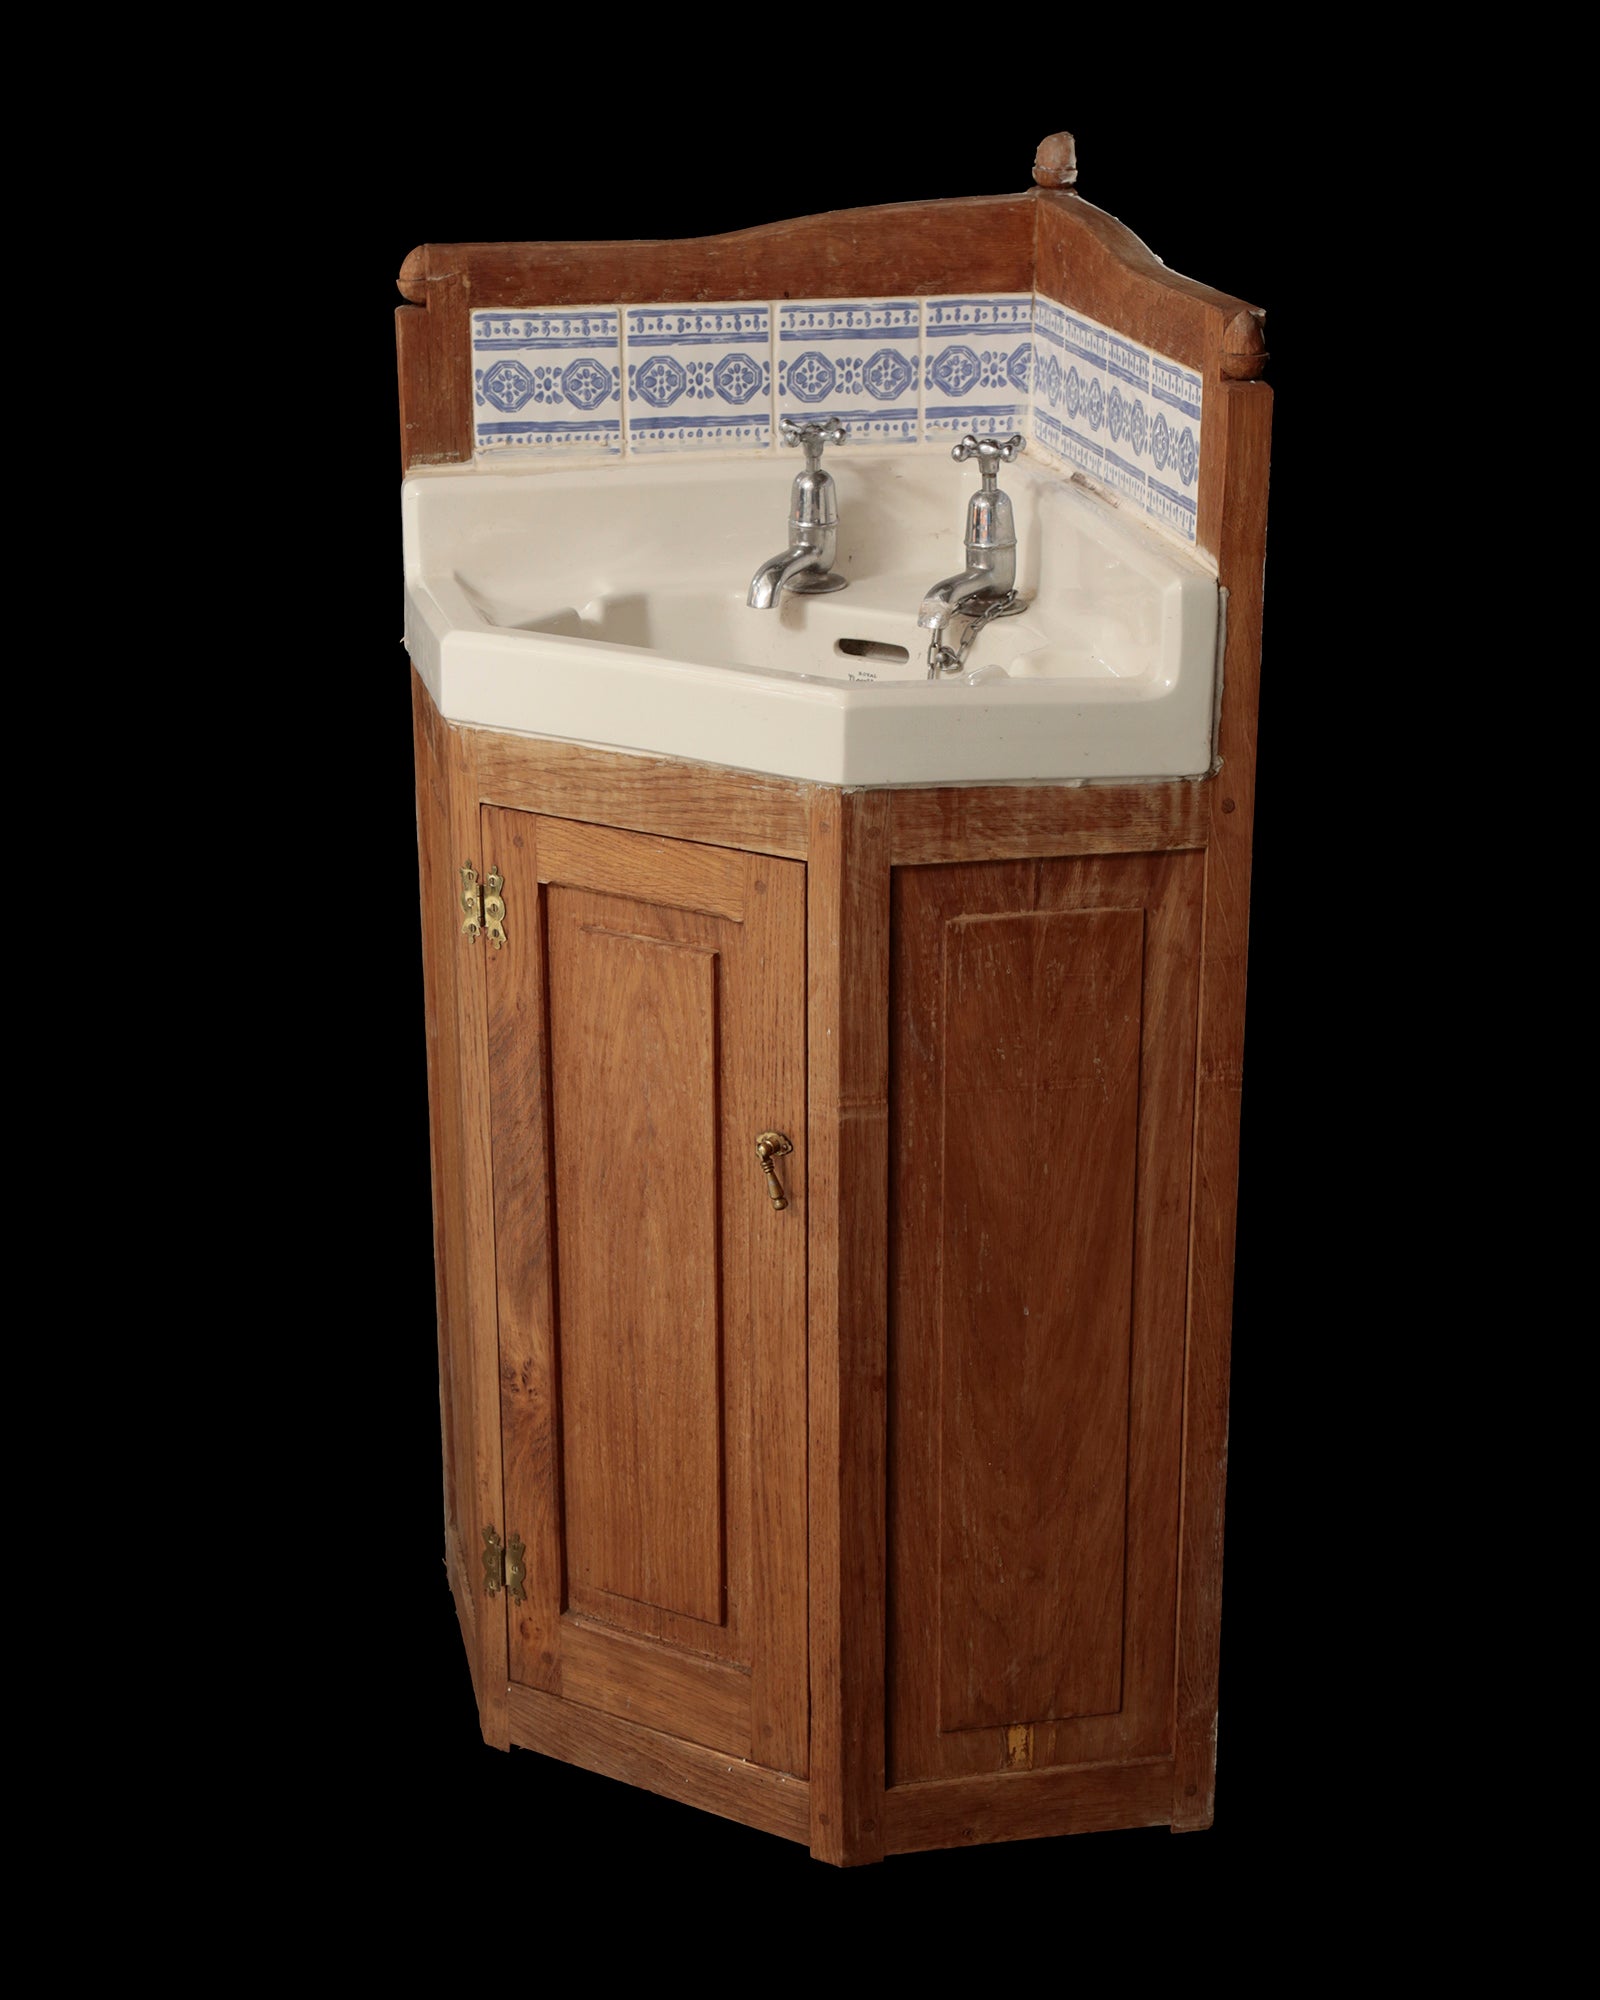 Bathroom props, vintage corner sink basin in wooden cabinet, The Bold Bathroom Company